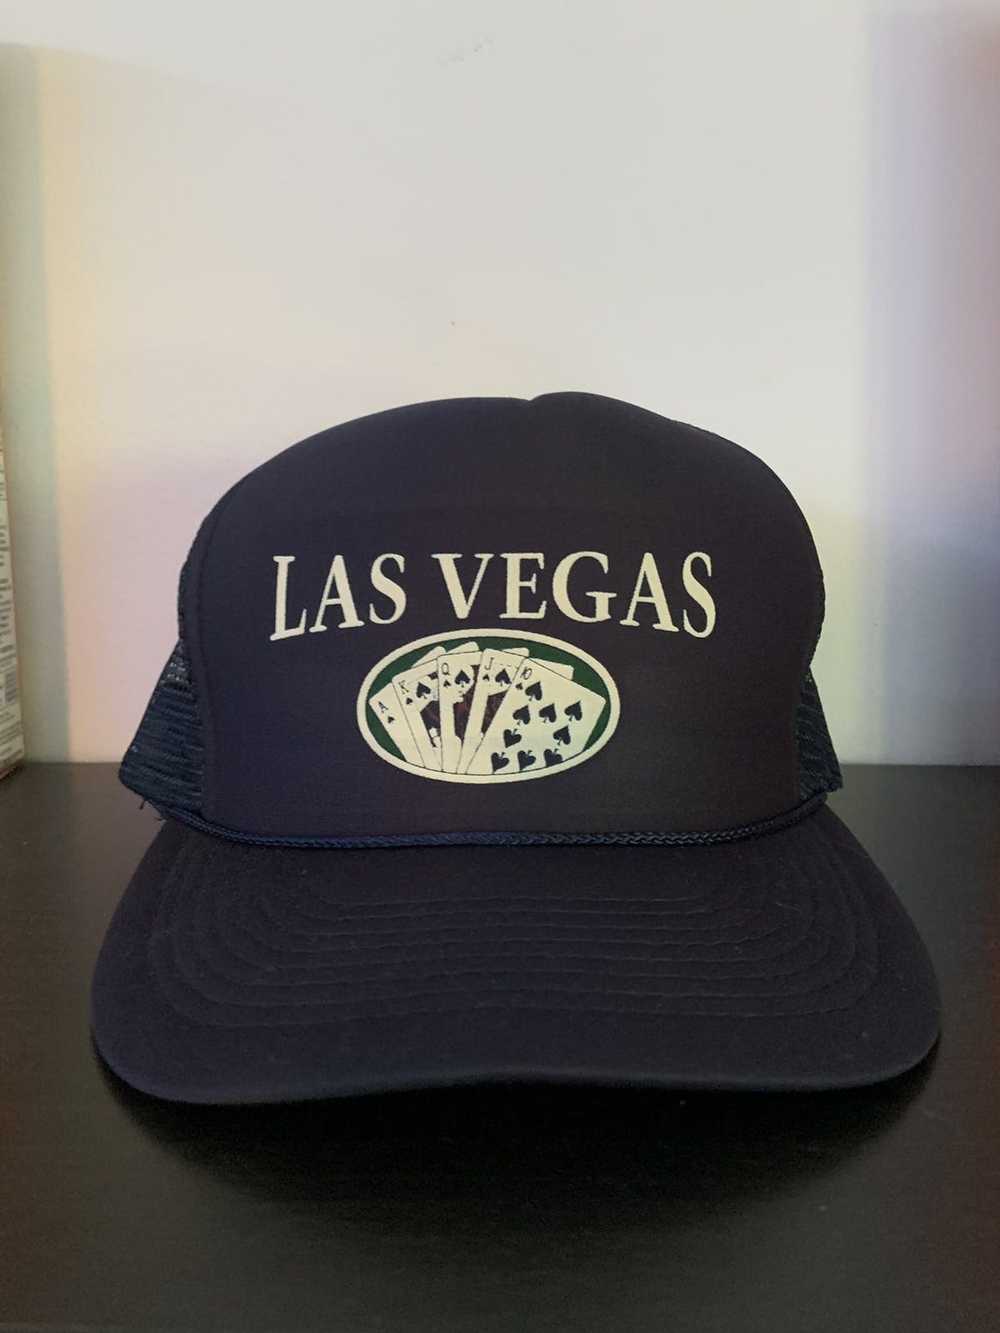 Hat × Trucker Hat × Vintage Las Vegas Trucker Hat - image 1